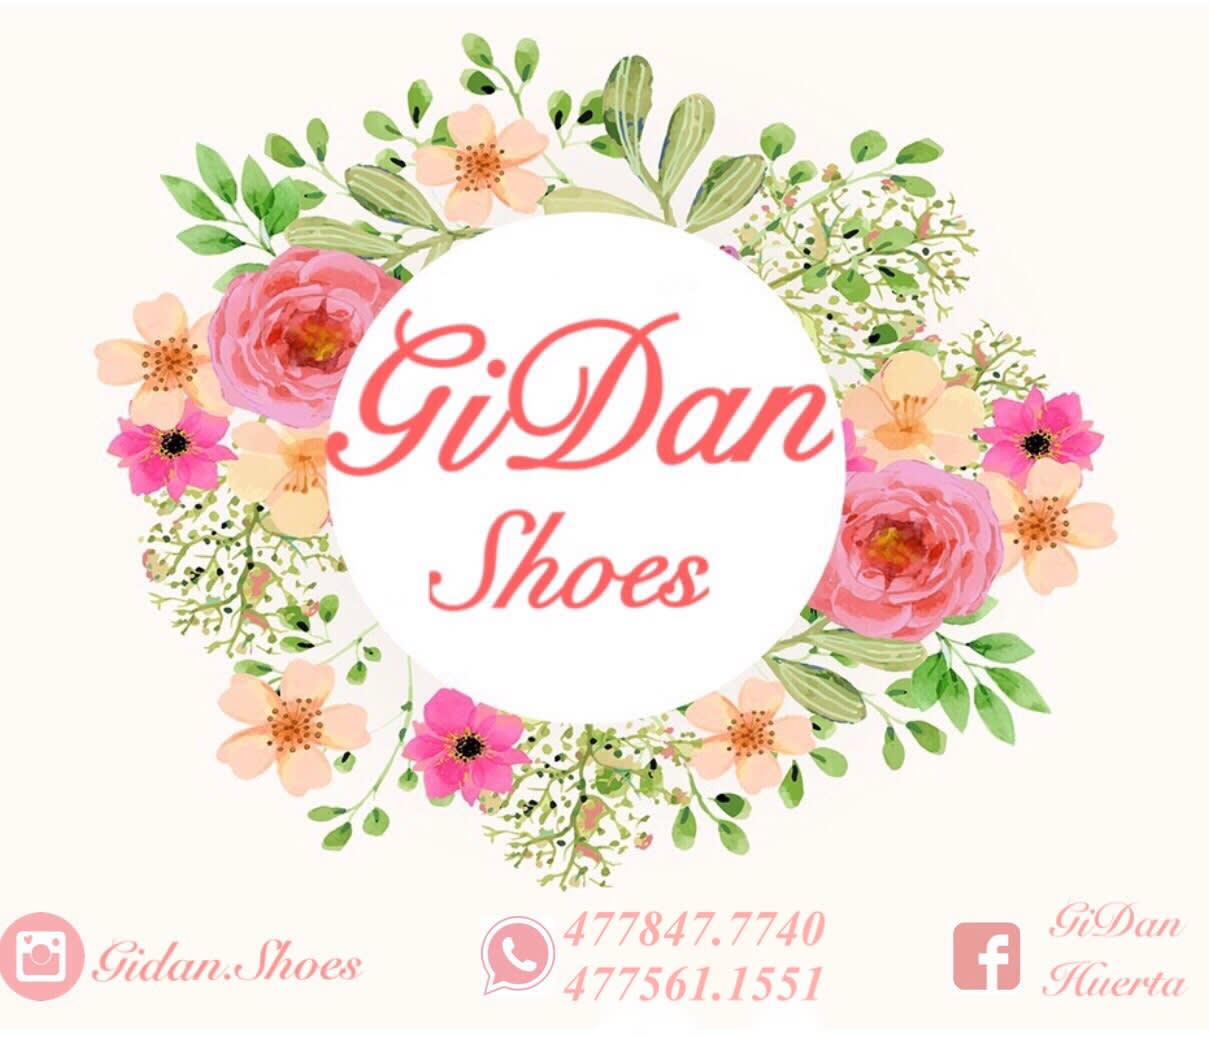 Gidan Shoes